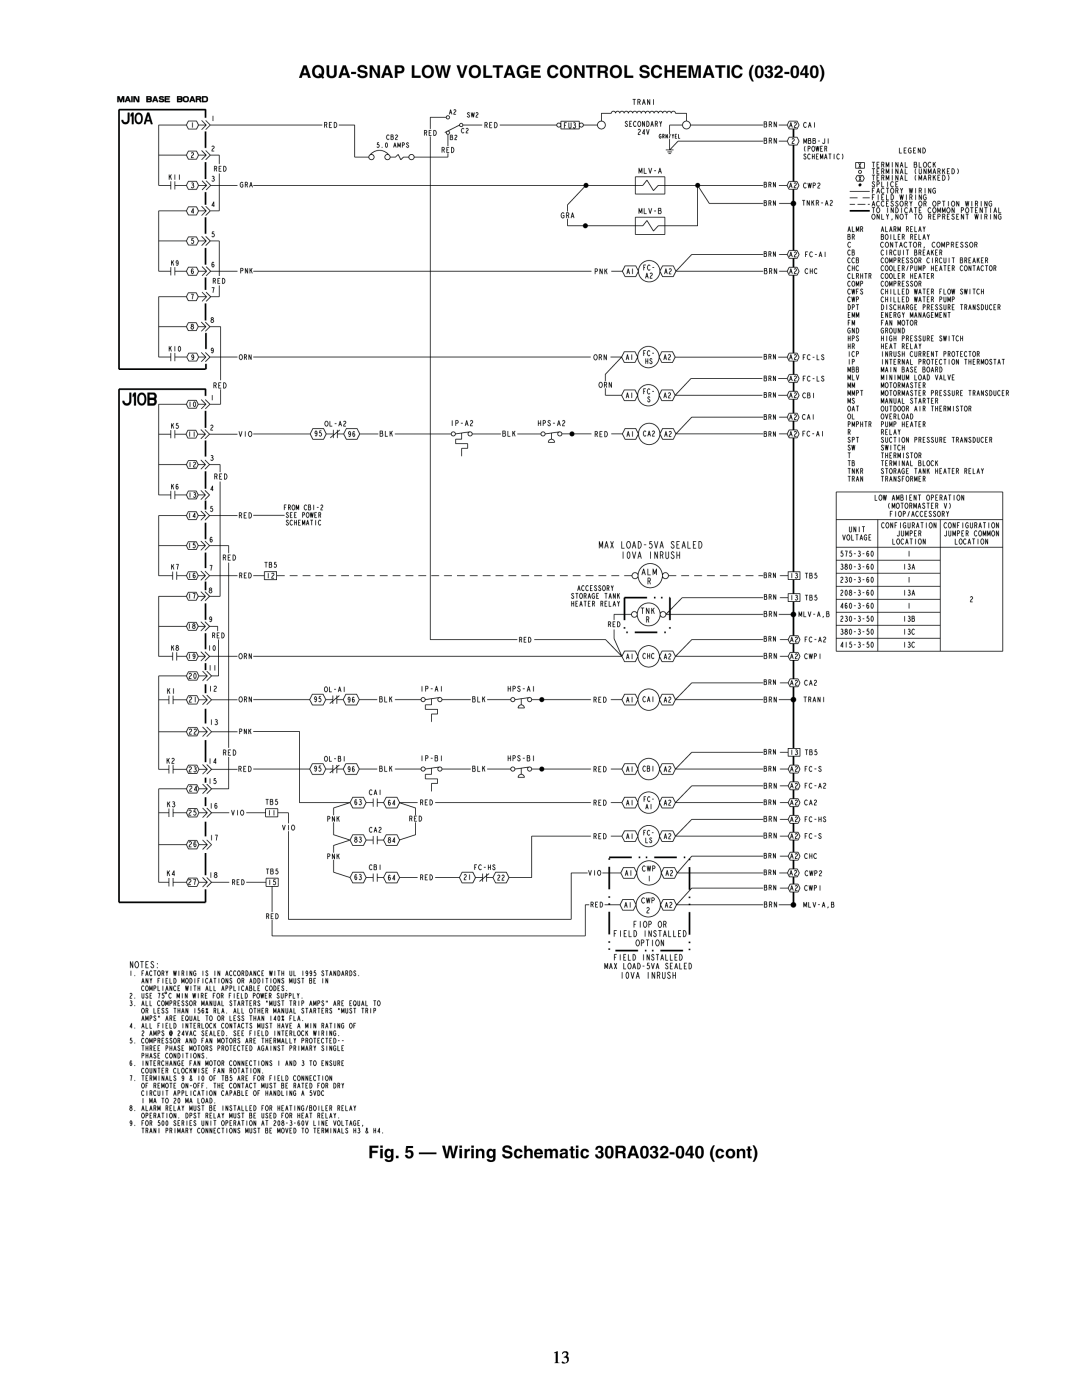 Sterling 30RA010-055 manual Wiring Schematic 30RA032-040cont, Aqua-Snaplow Voltage Control Schematic 